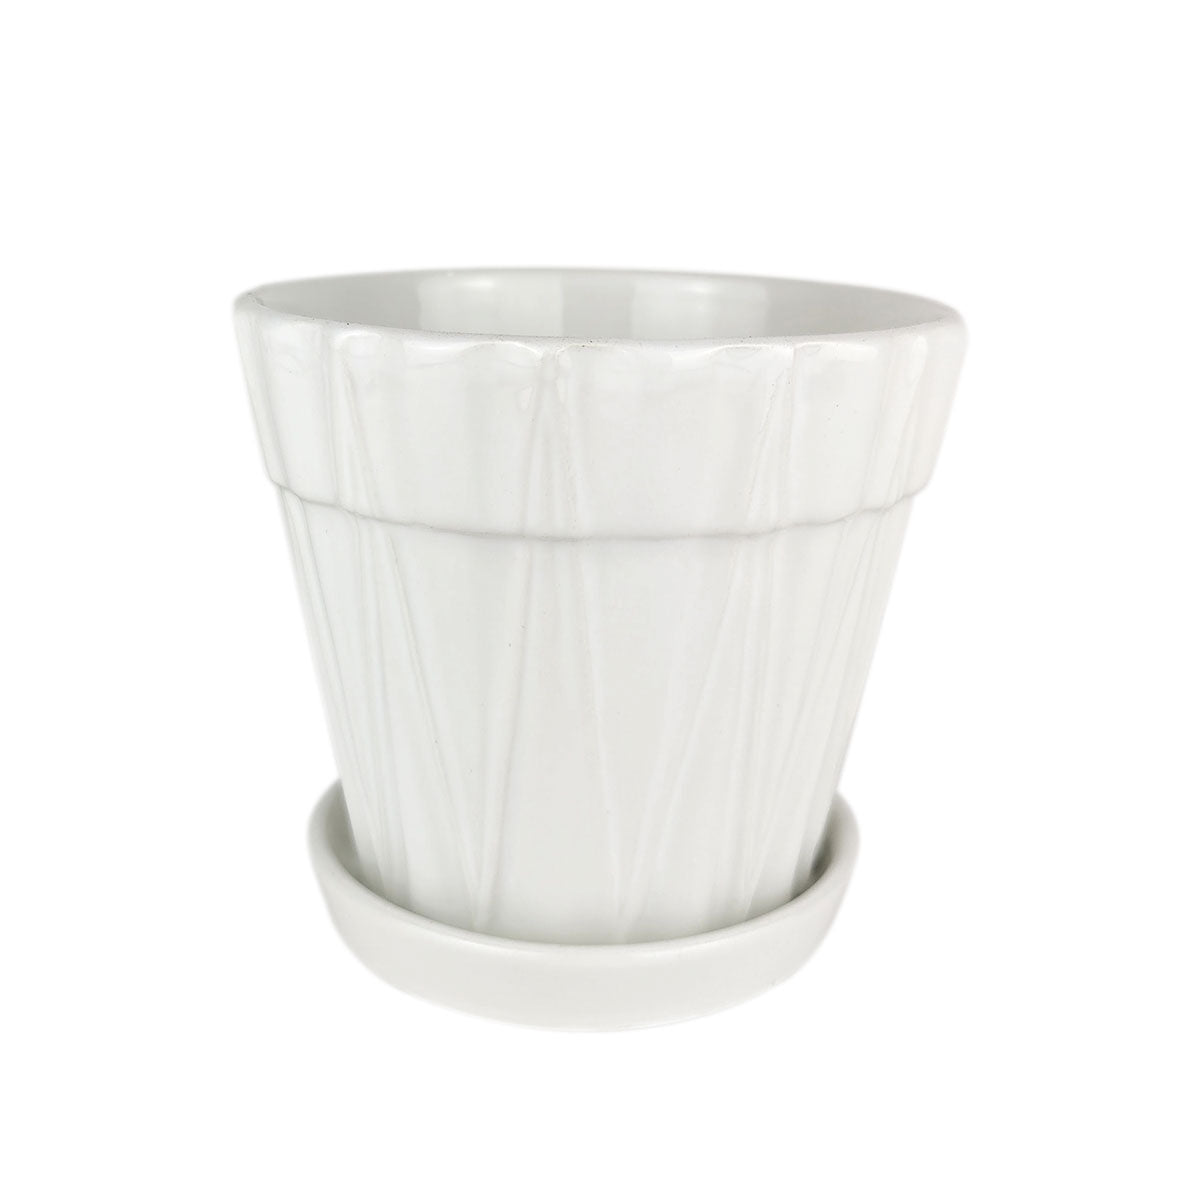 white decorative ceramic pot, pot with saucer and drainage hole, medium stylist pot for houseplants